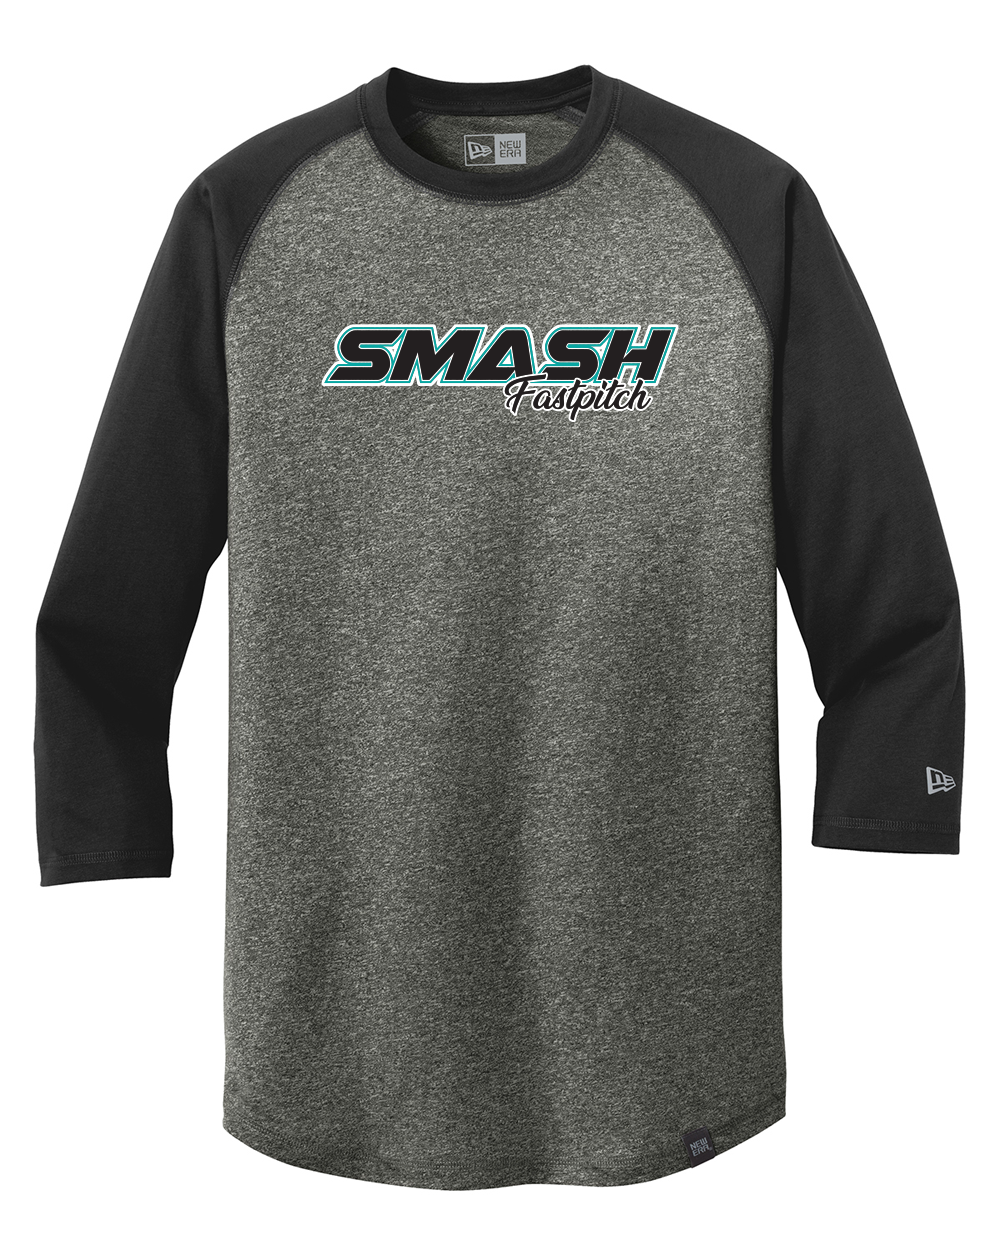 SMASH Fastpitch Online Store – Omni-Ink